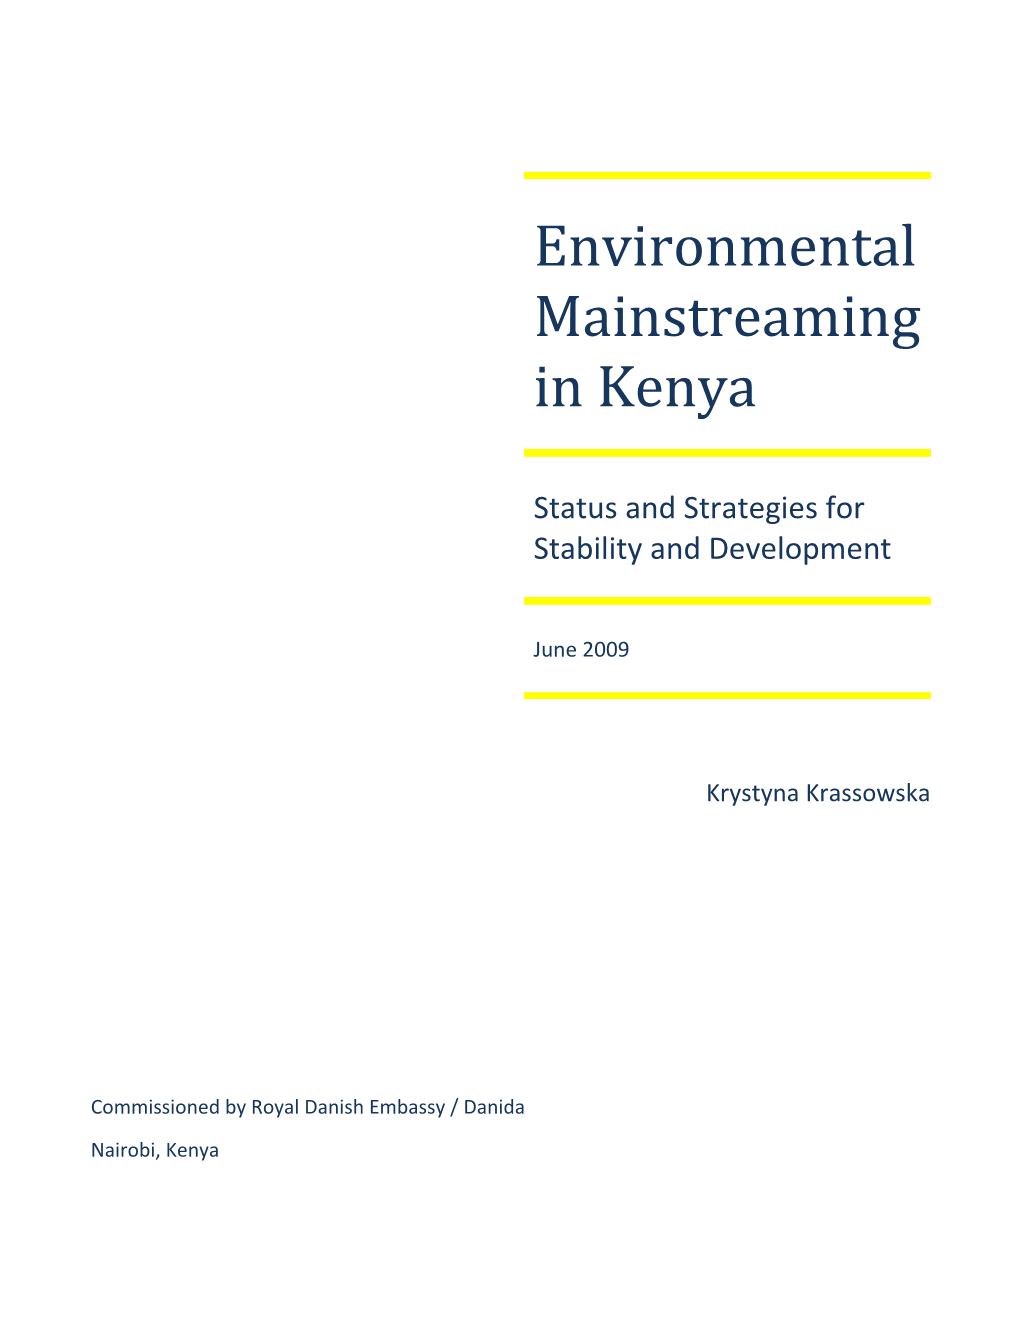 Environmental Mainstreaming In Kenya